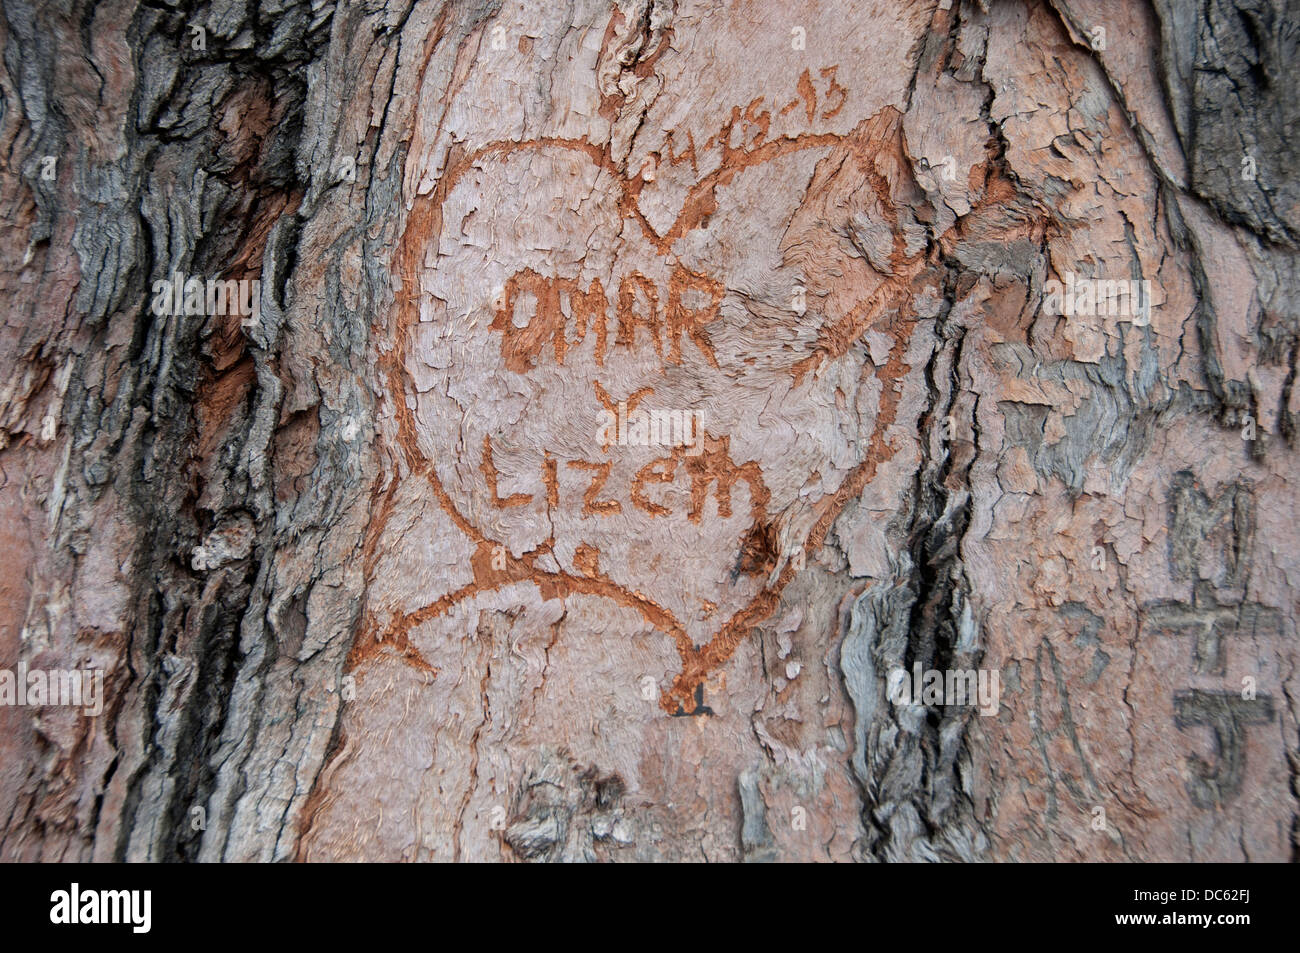 Bolivia June 2013. Love heart carved on tree bark Stock Photo